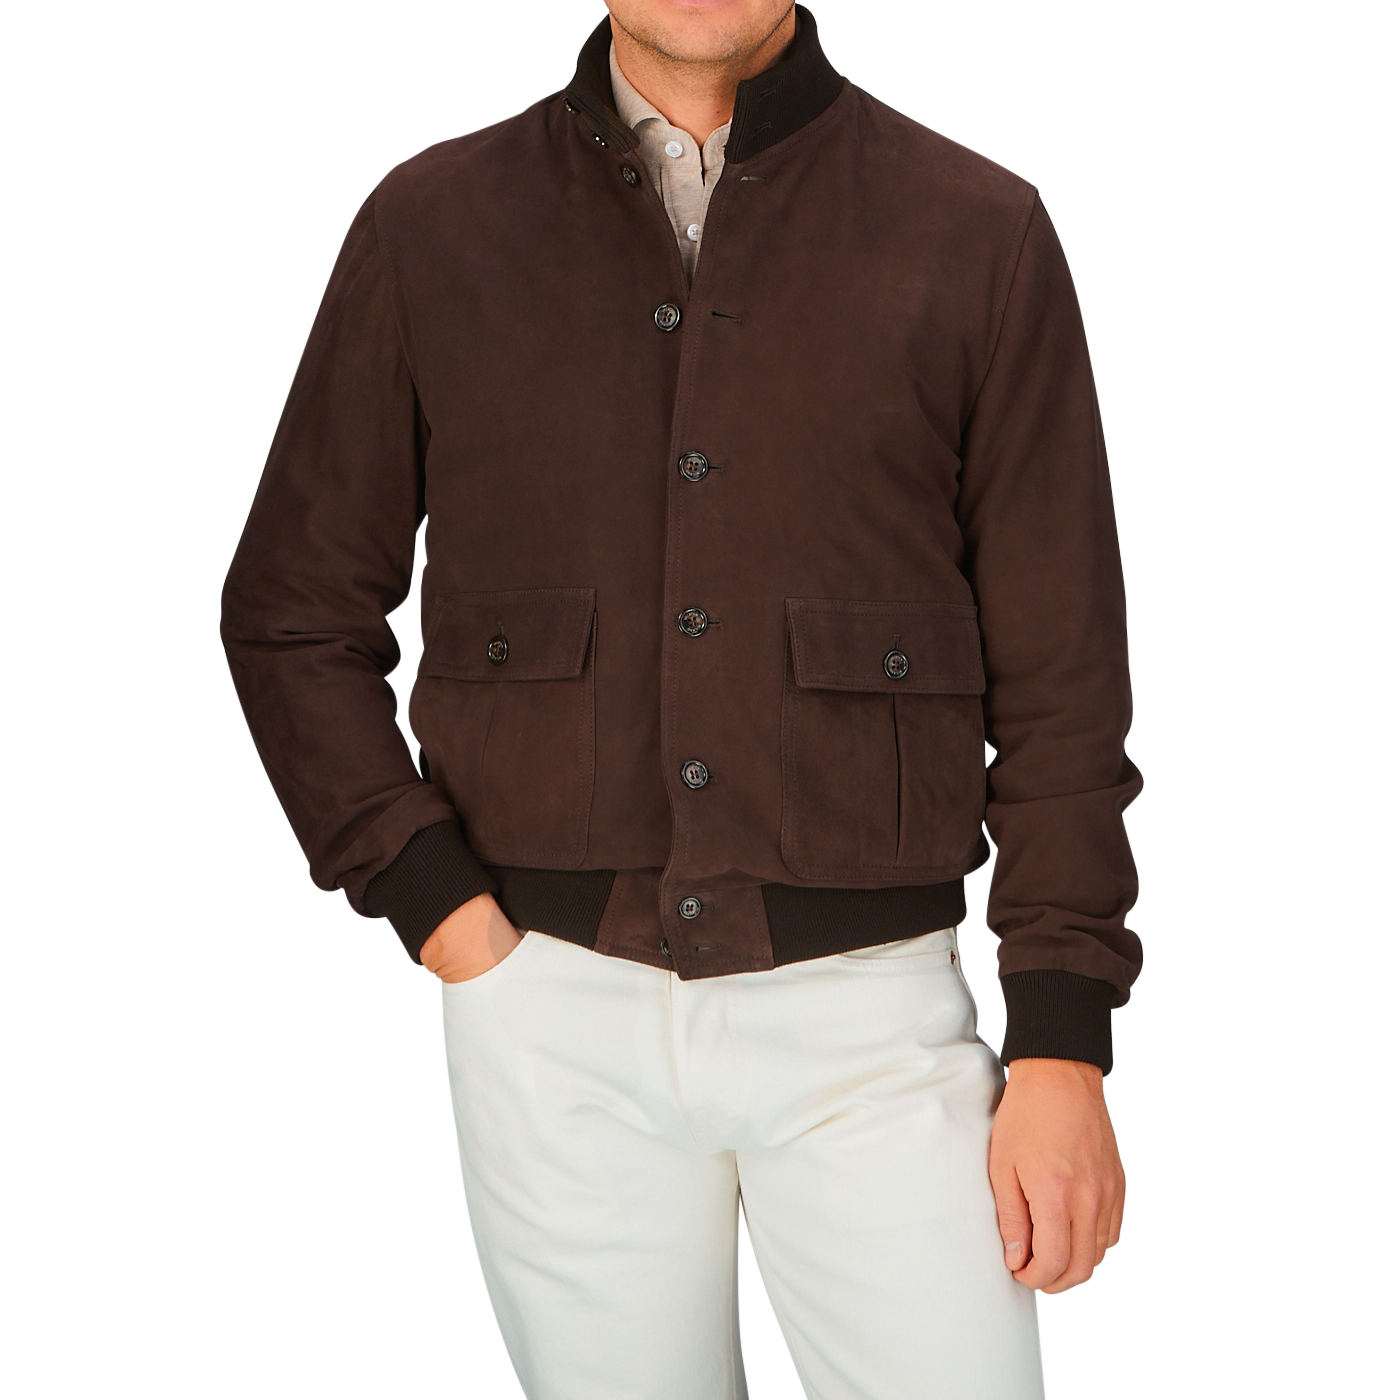 Man wearing an Italian Valstar dark brown suede leather Valstarino jacket and white pants.